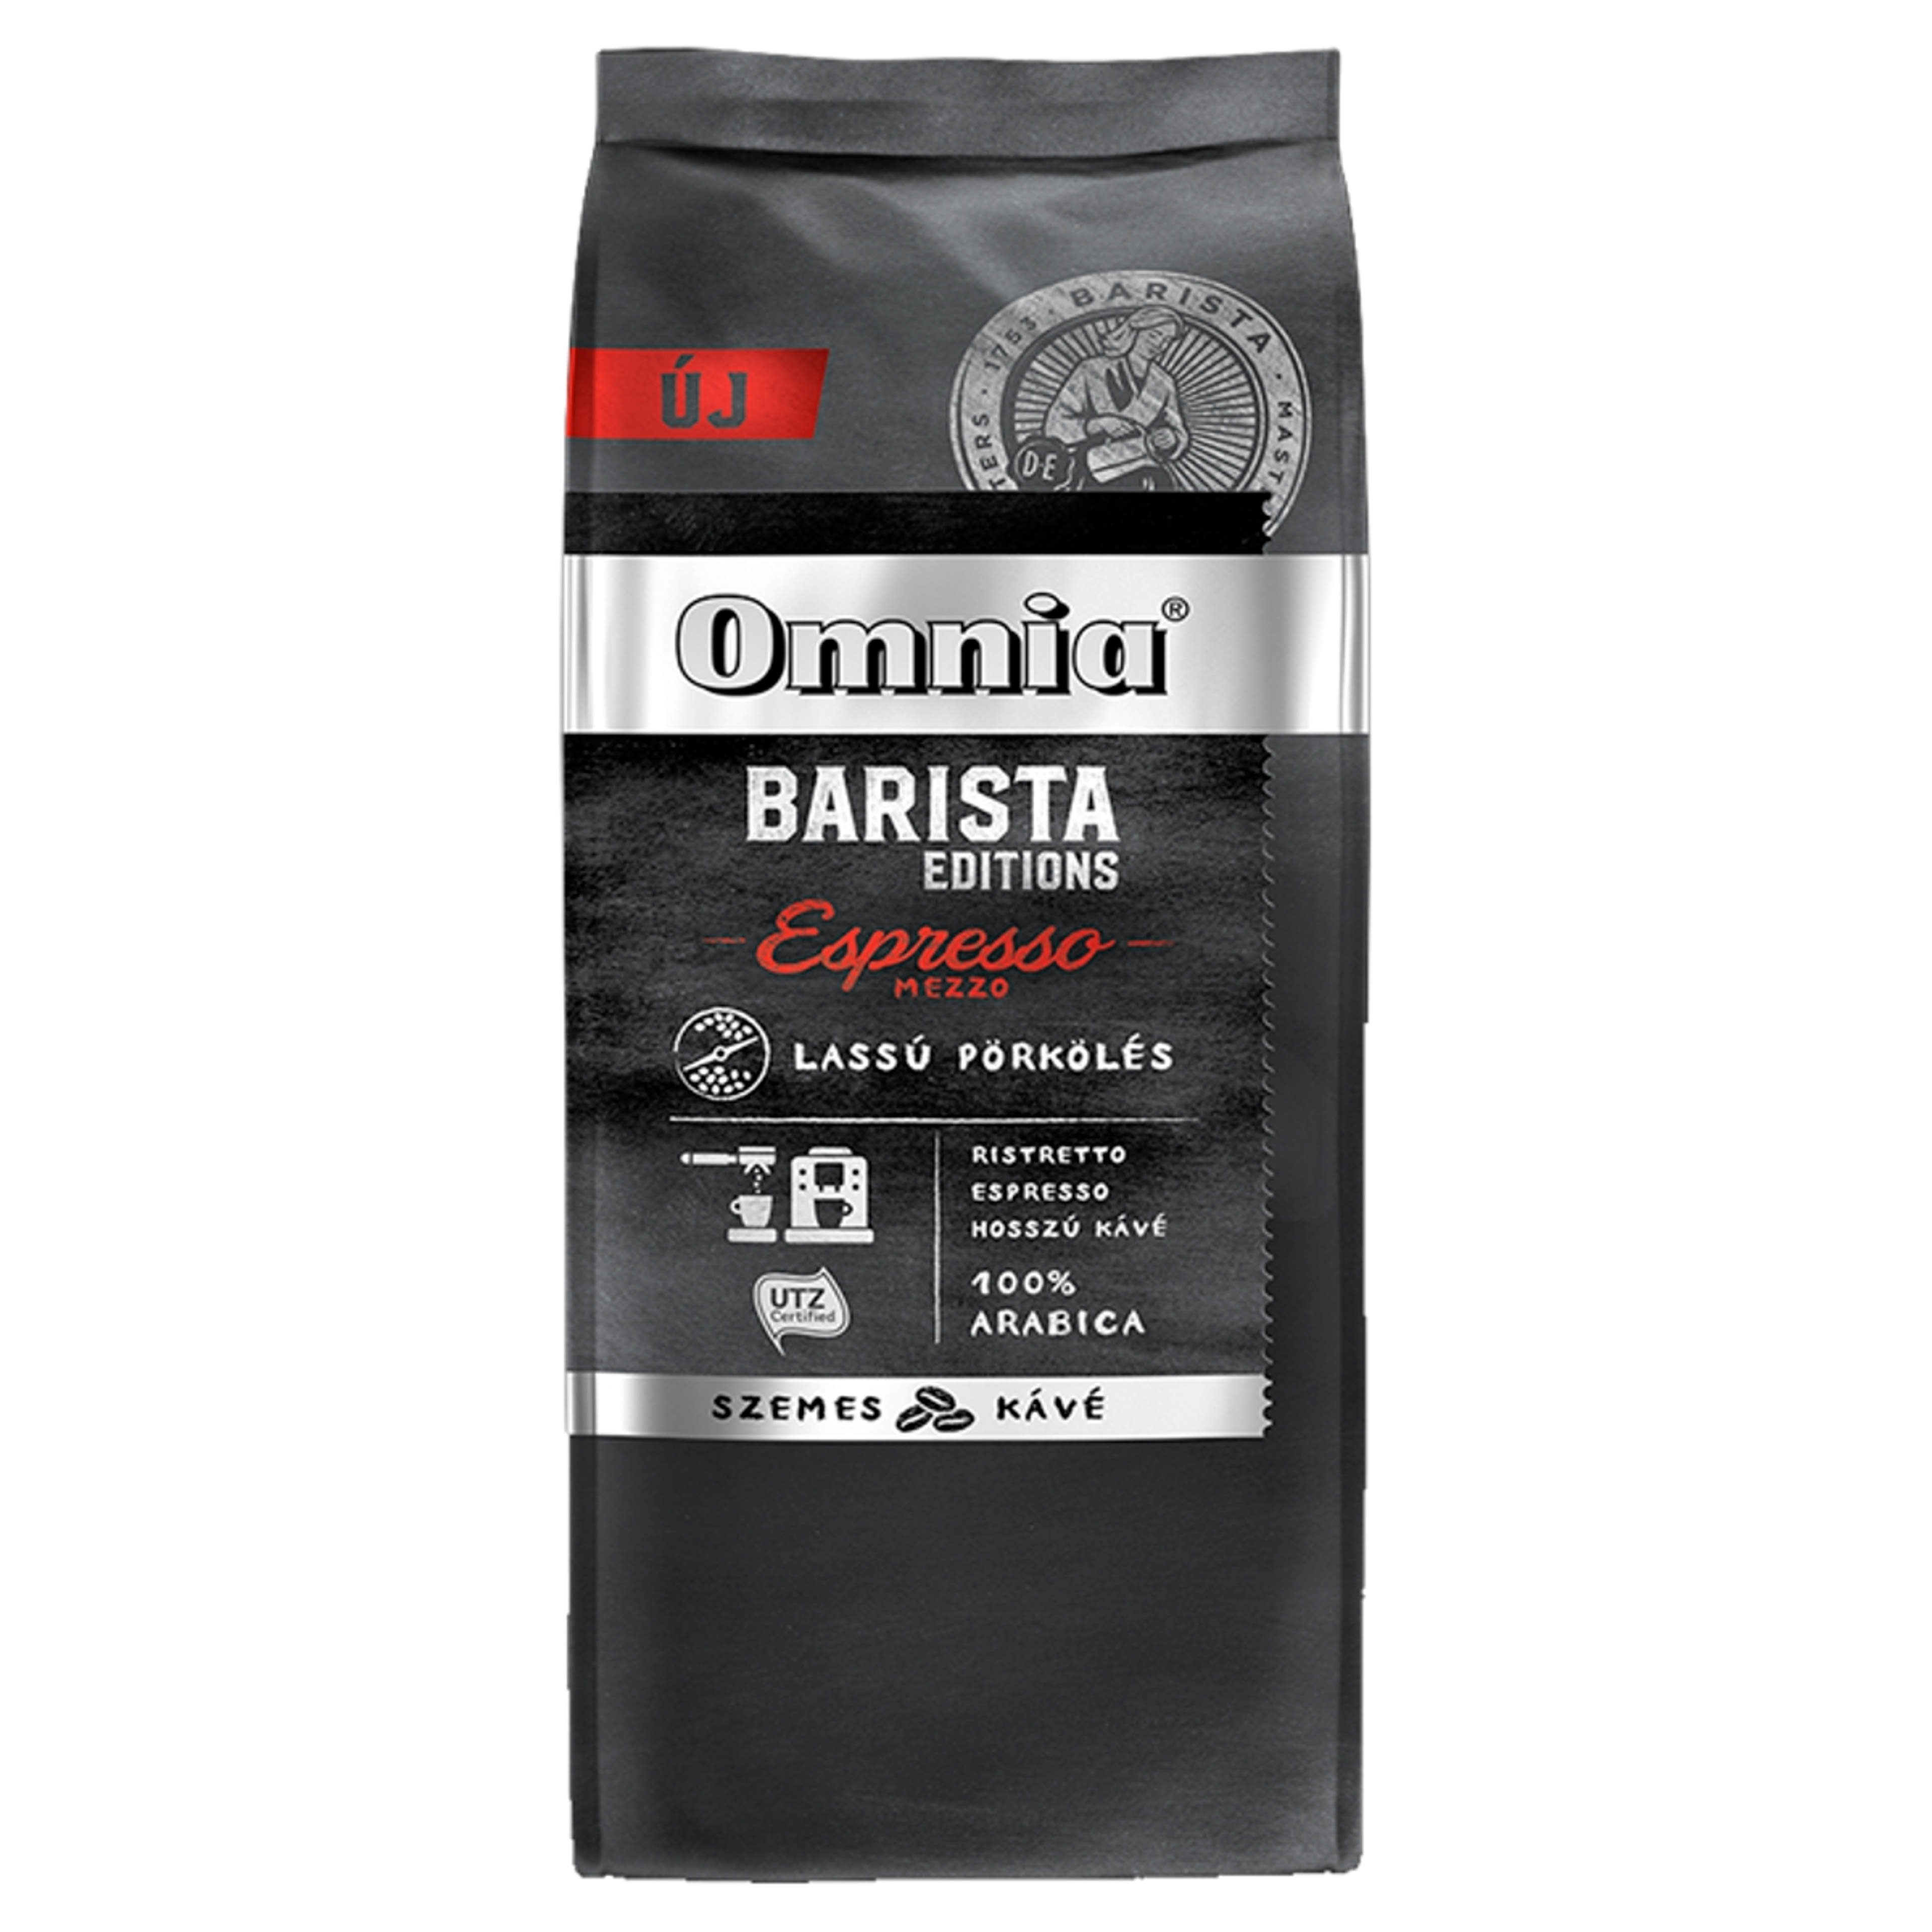 Douwe Egberts Omnia Barista Edition Espresso Mezzo szemes kávé - 900 g